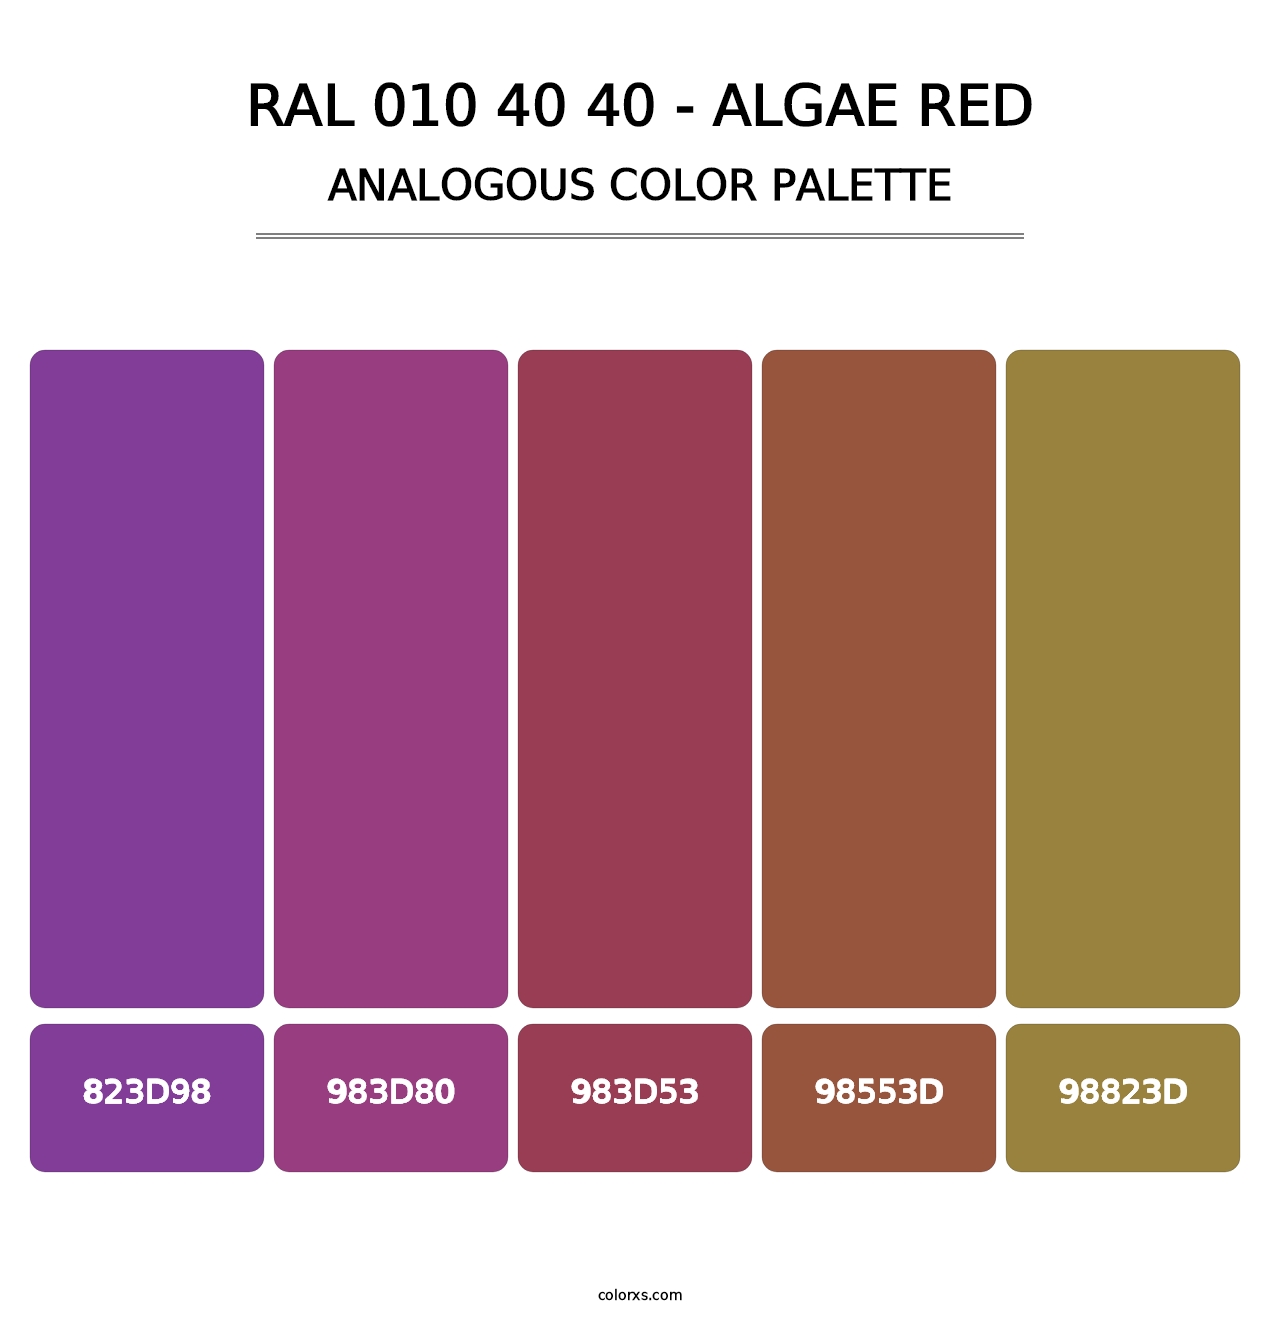 RAL 010 40 40 - Algae Red - Analogous Color Palette